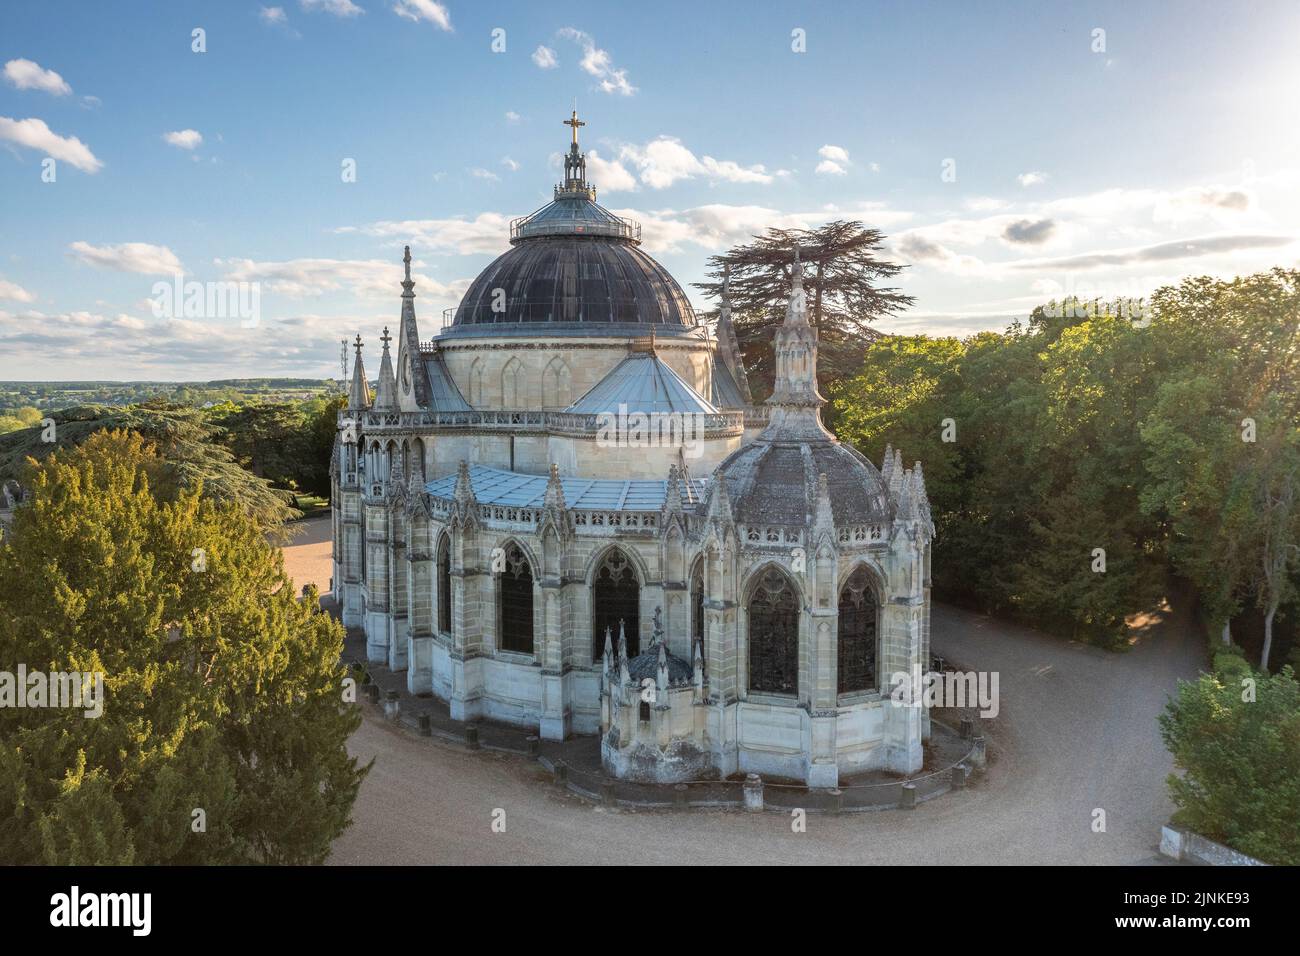 Francia, Eure-et-Loir, Dreux, necrópolis capilla real de San Luis de la familia Orleans situado dentro del recinto del castillo de Dreux (vi aéreo Foto de stock